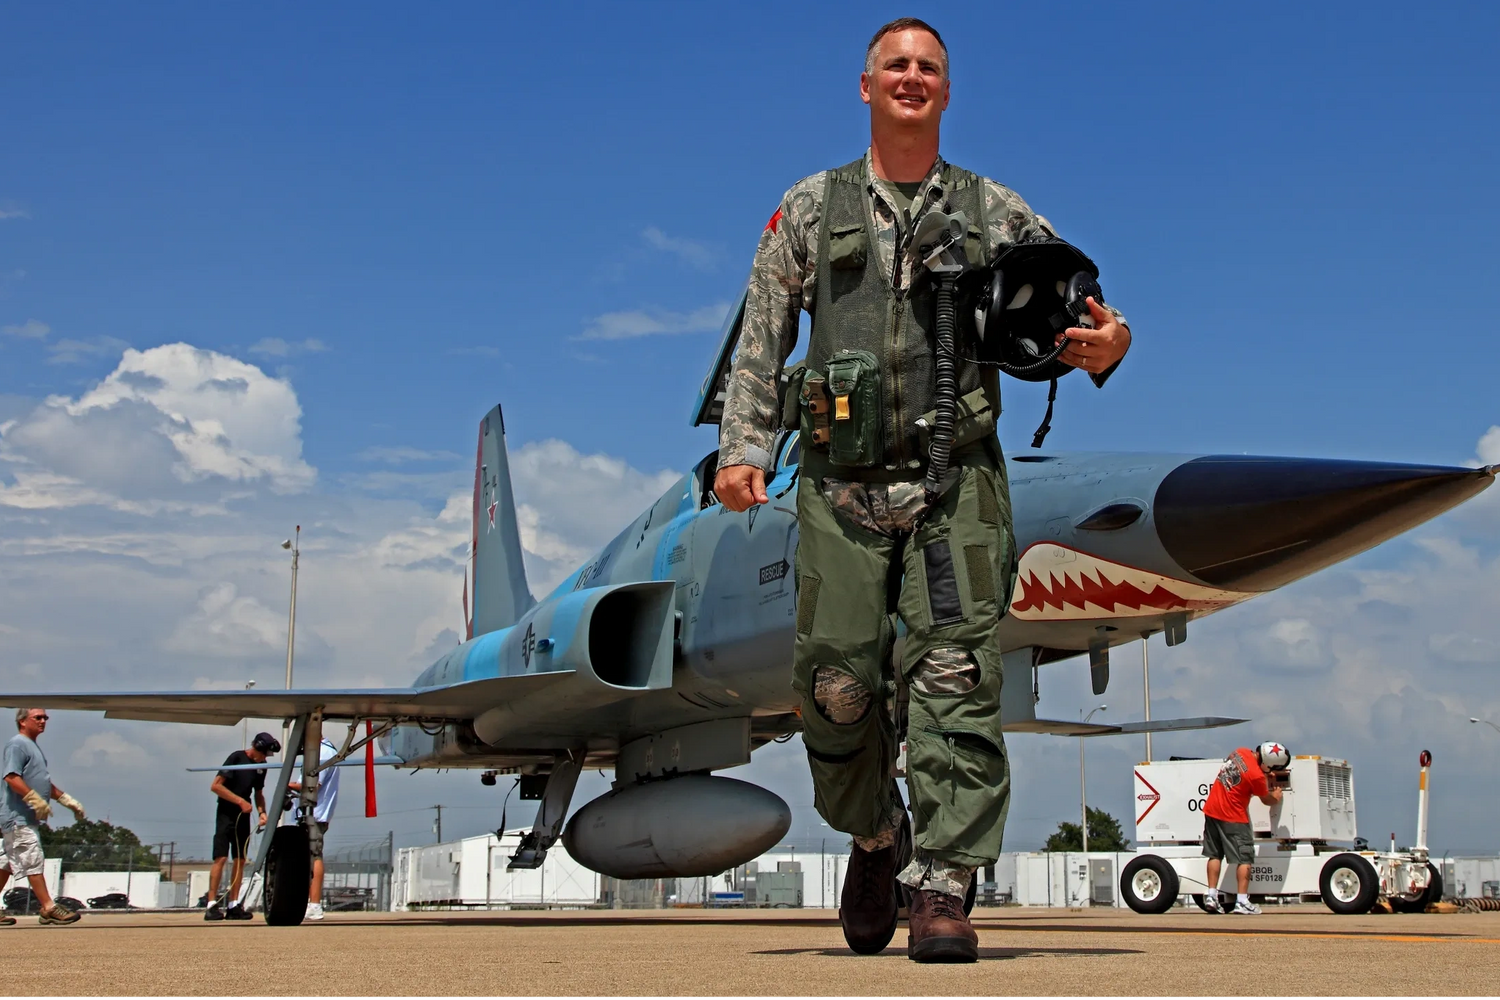 John "Bag" Hefti, walking in front of an F-5 Tiger airplane.